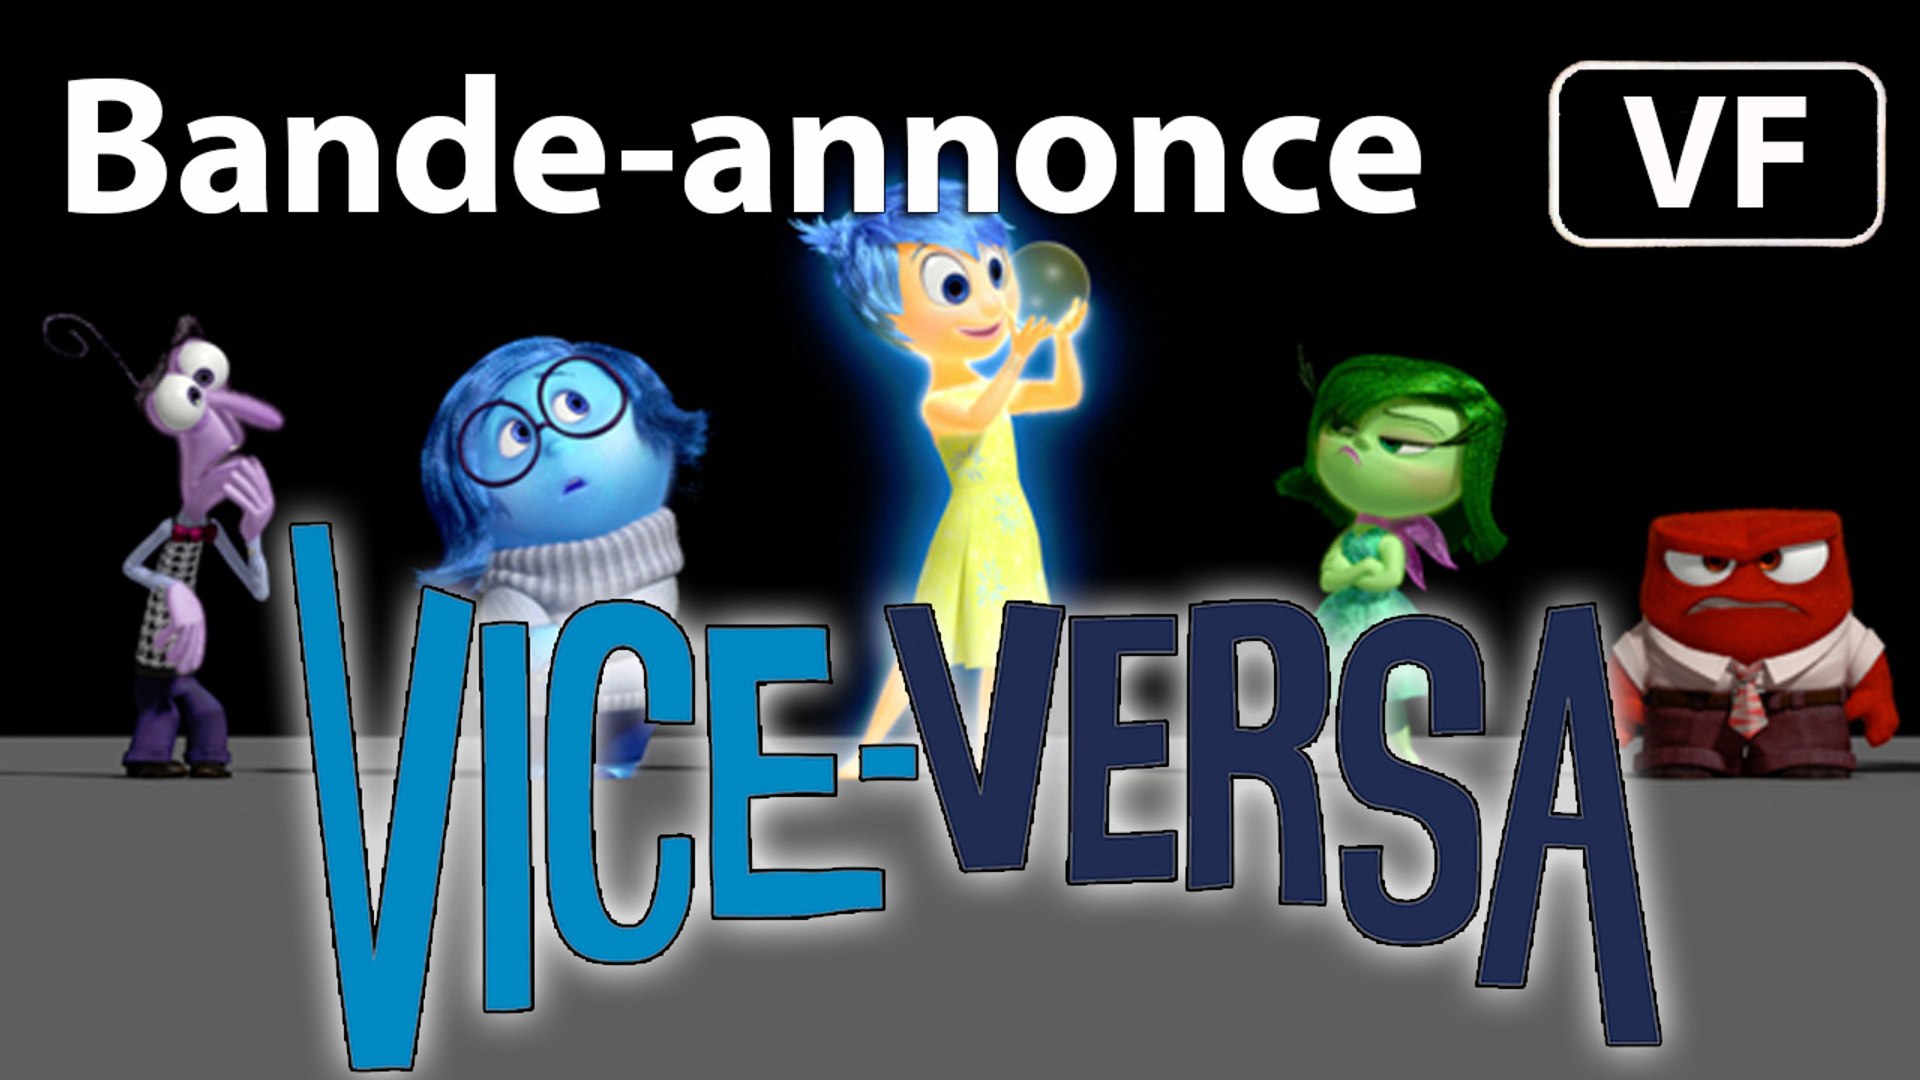 VICE-VERSA - Bande-annonce 2 / Trailer [VF|HD] (Disney-Pixar) [Cannes 2015]  - Vidéo Dailymotion